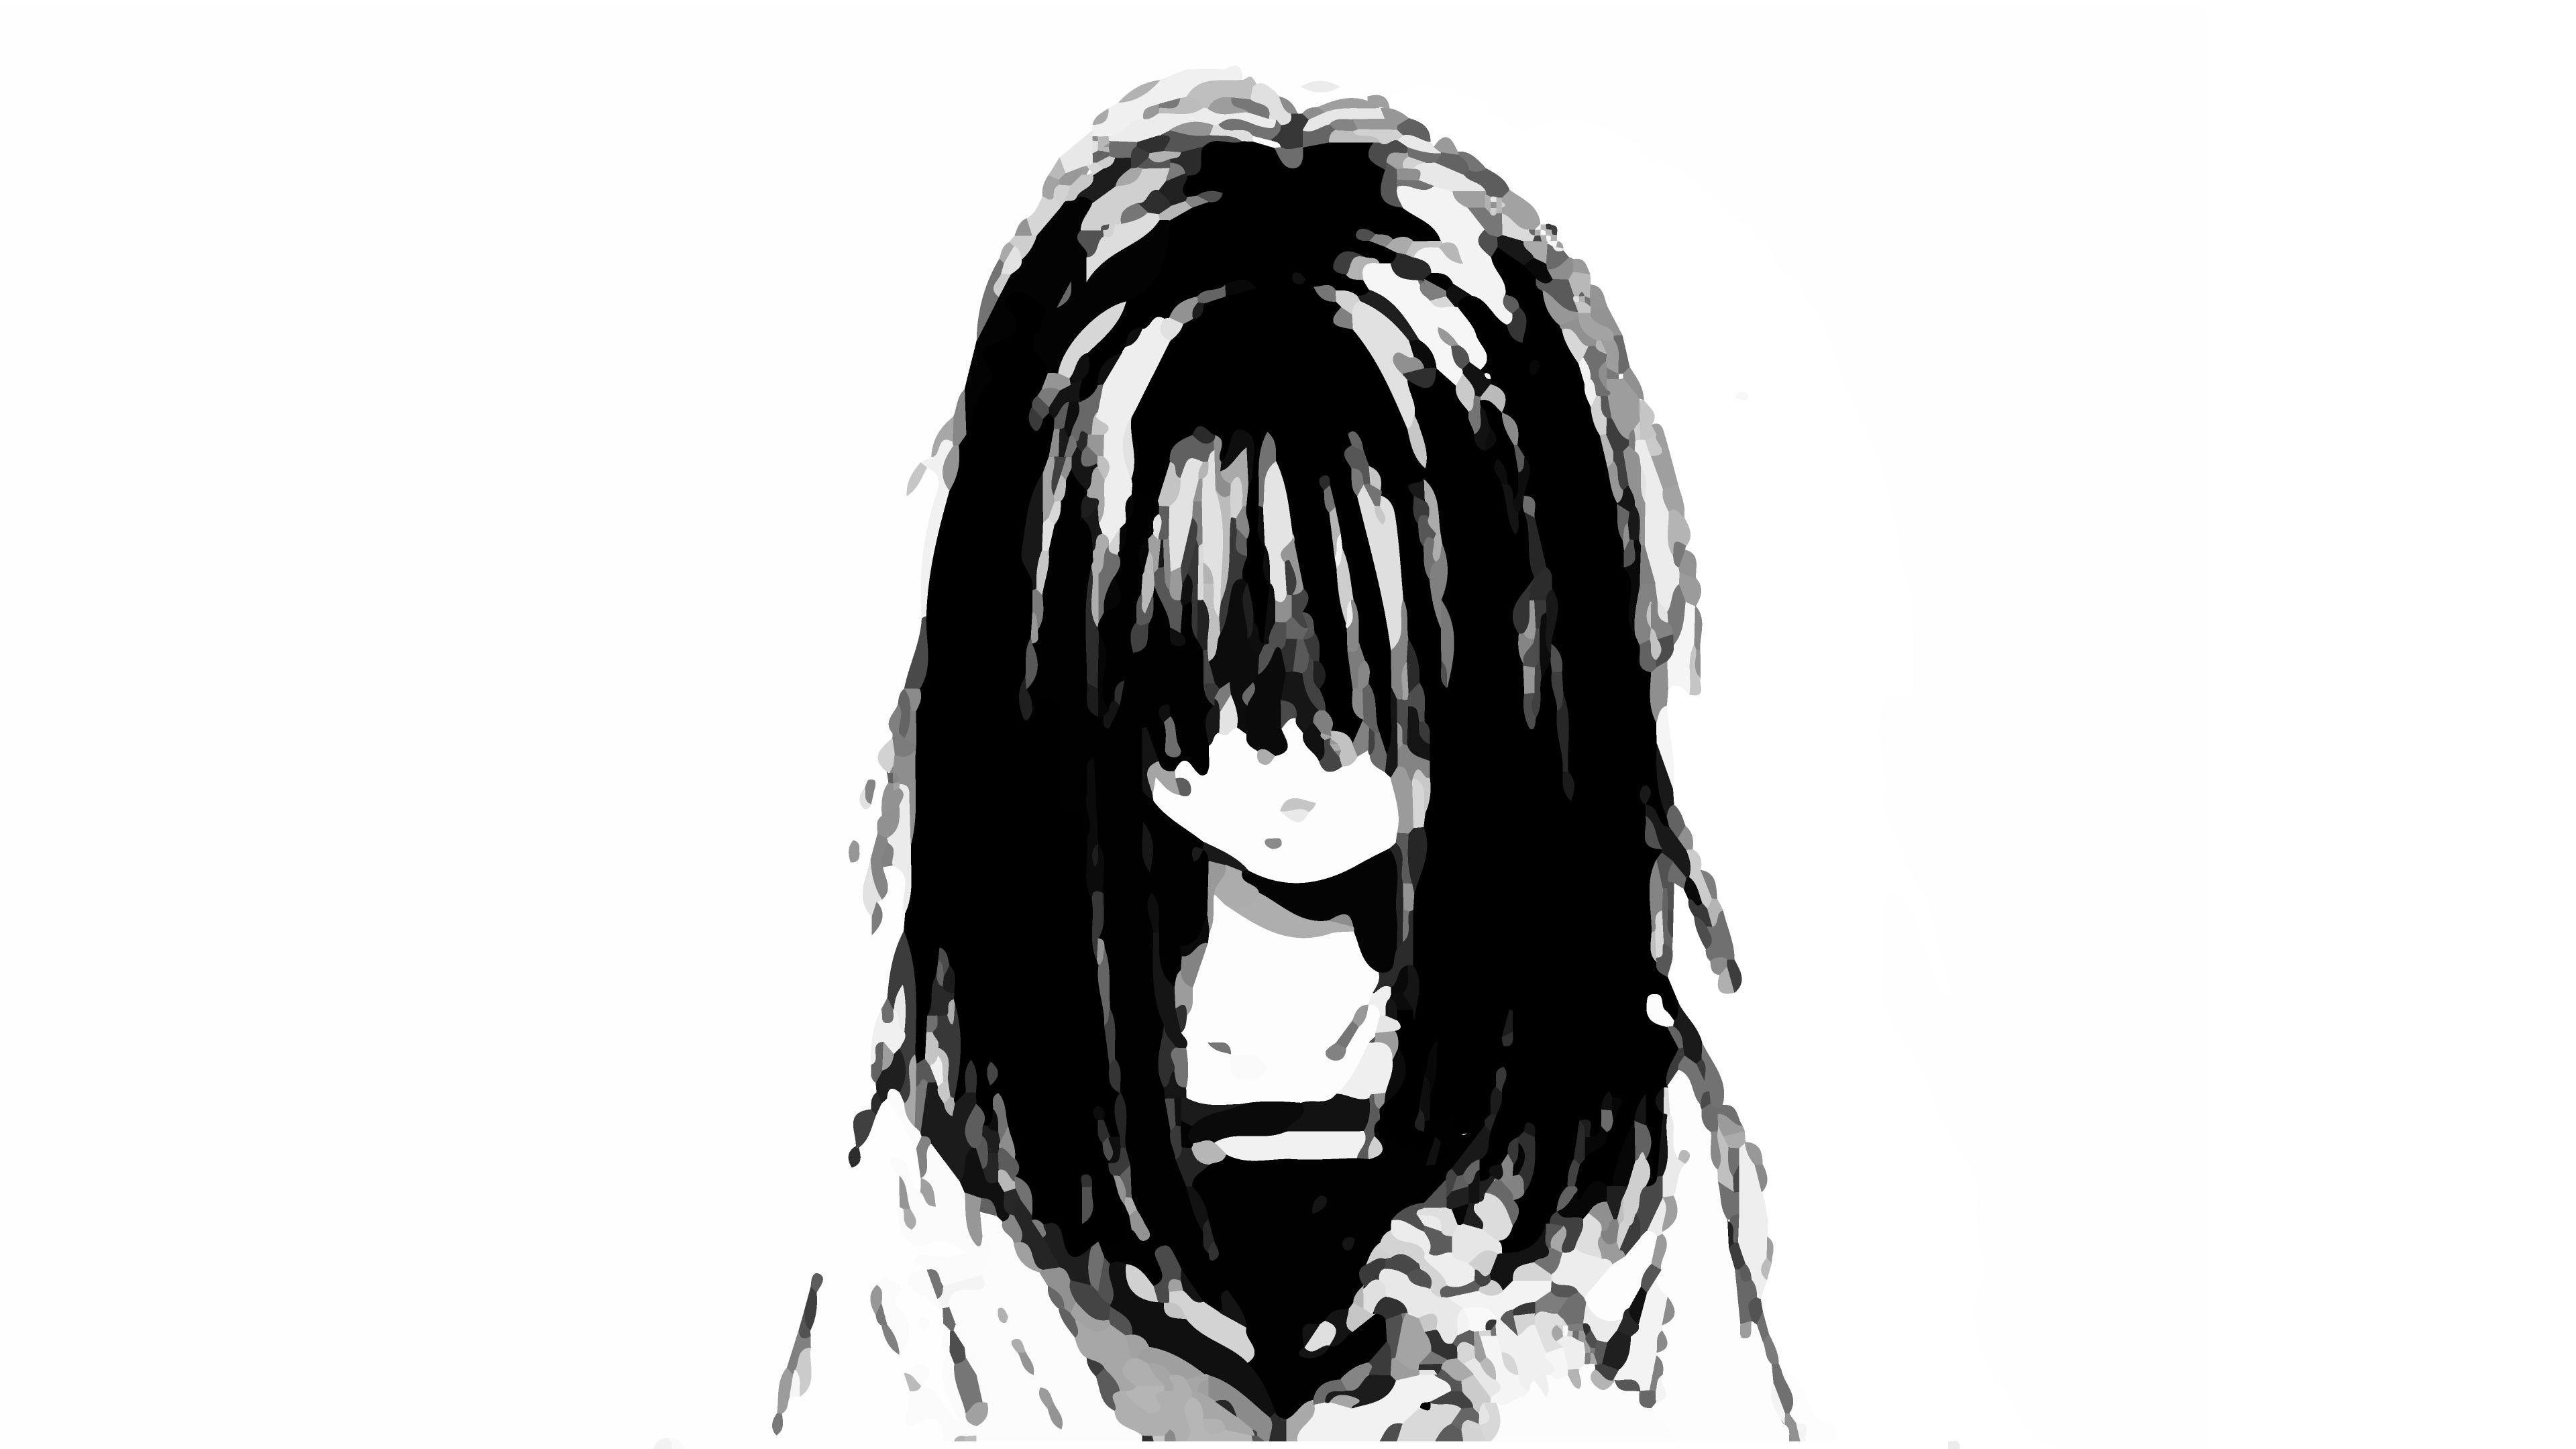 Sad Anime Girl Black and White Wallpaper Free Sad Anime Girl Black and White Background